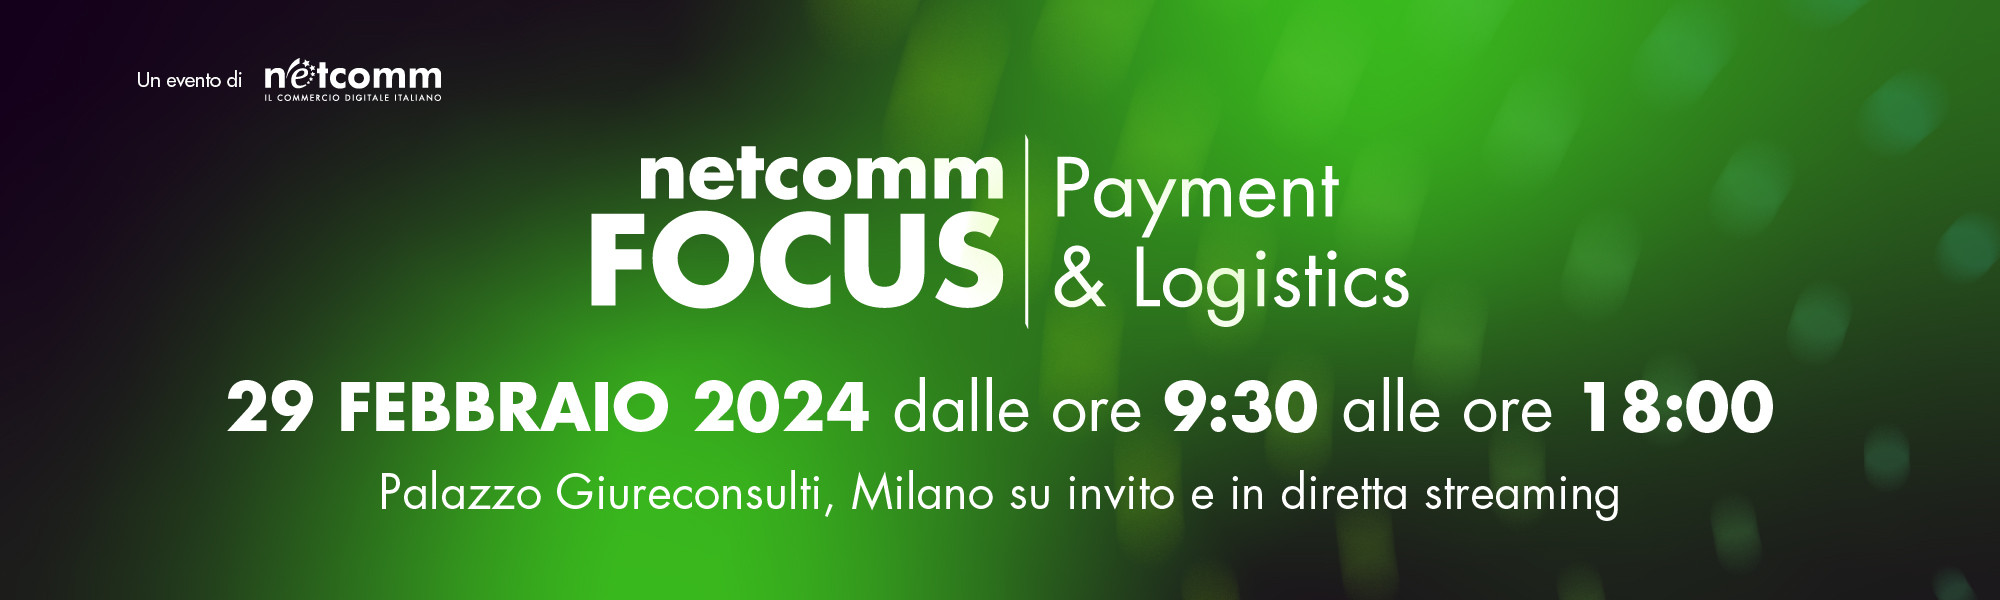 netcomm focus: payment & logistics